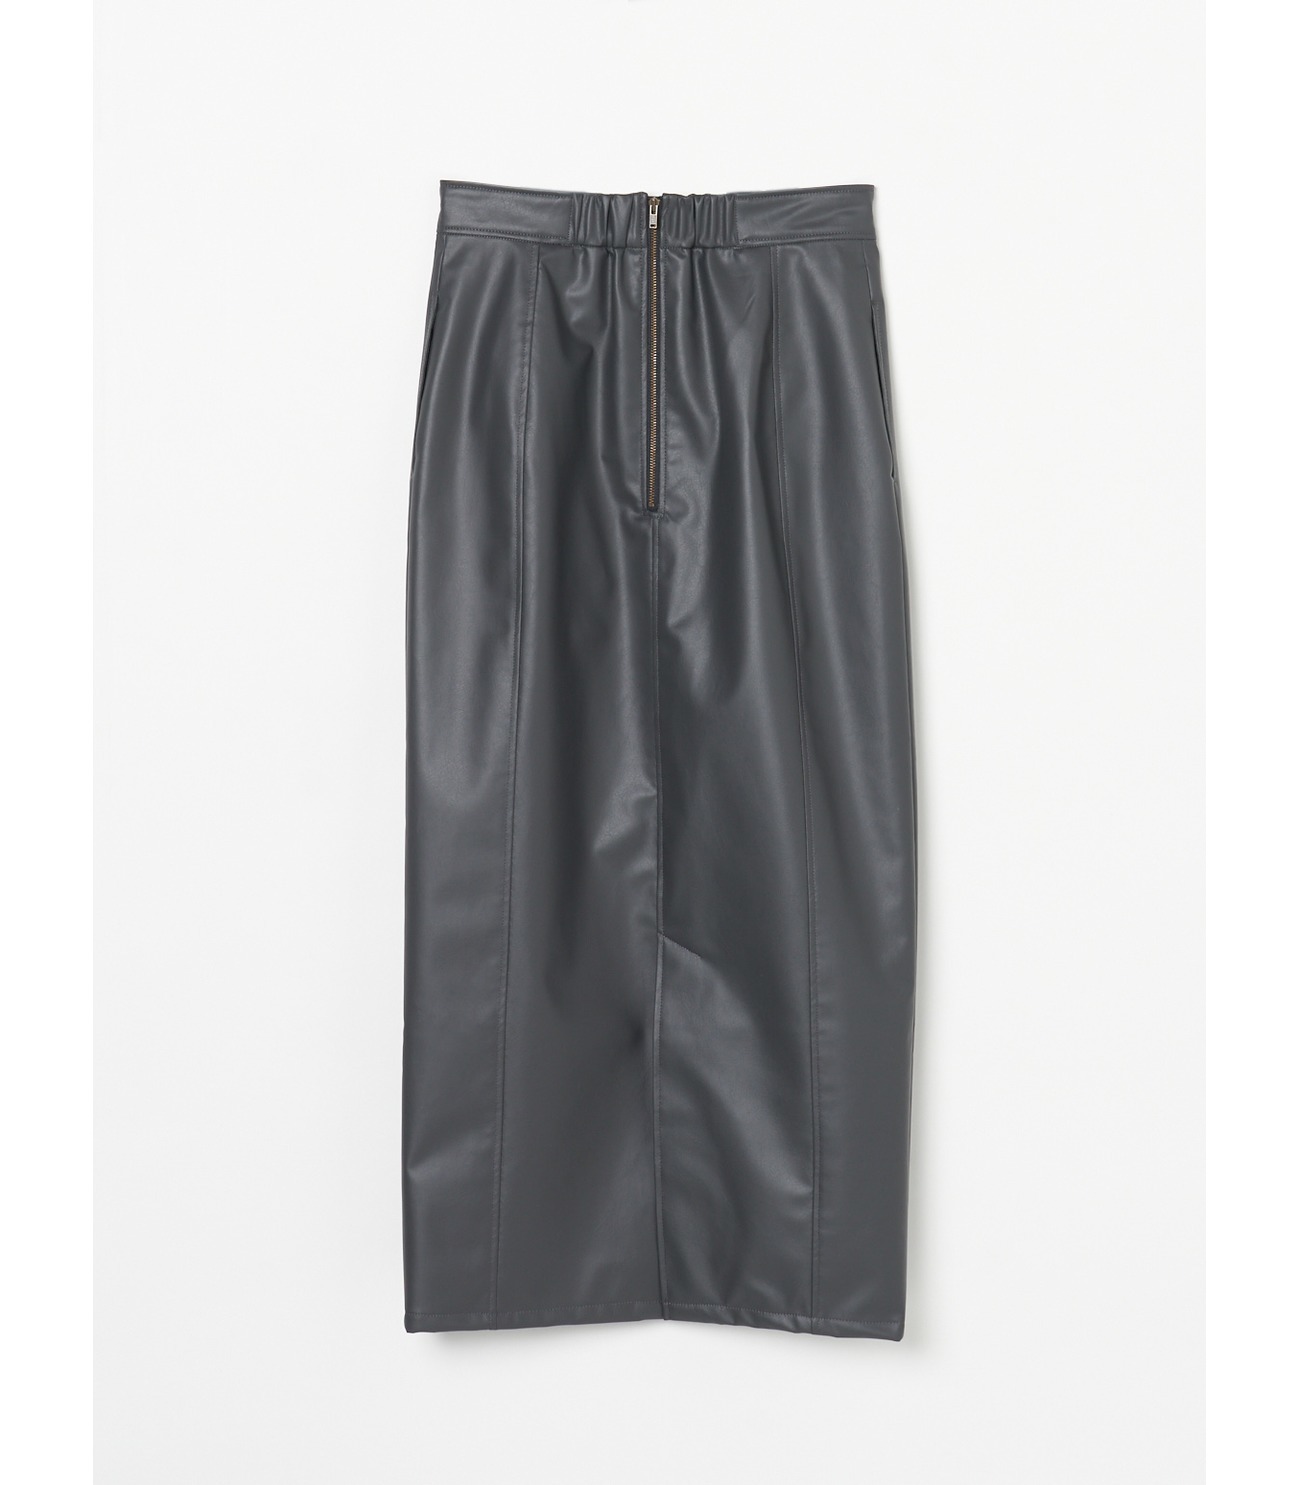 Fake leather jumper skirts 詳細画像 charcoal black 10